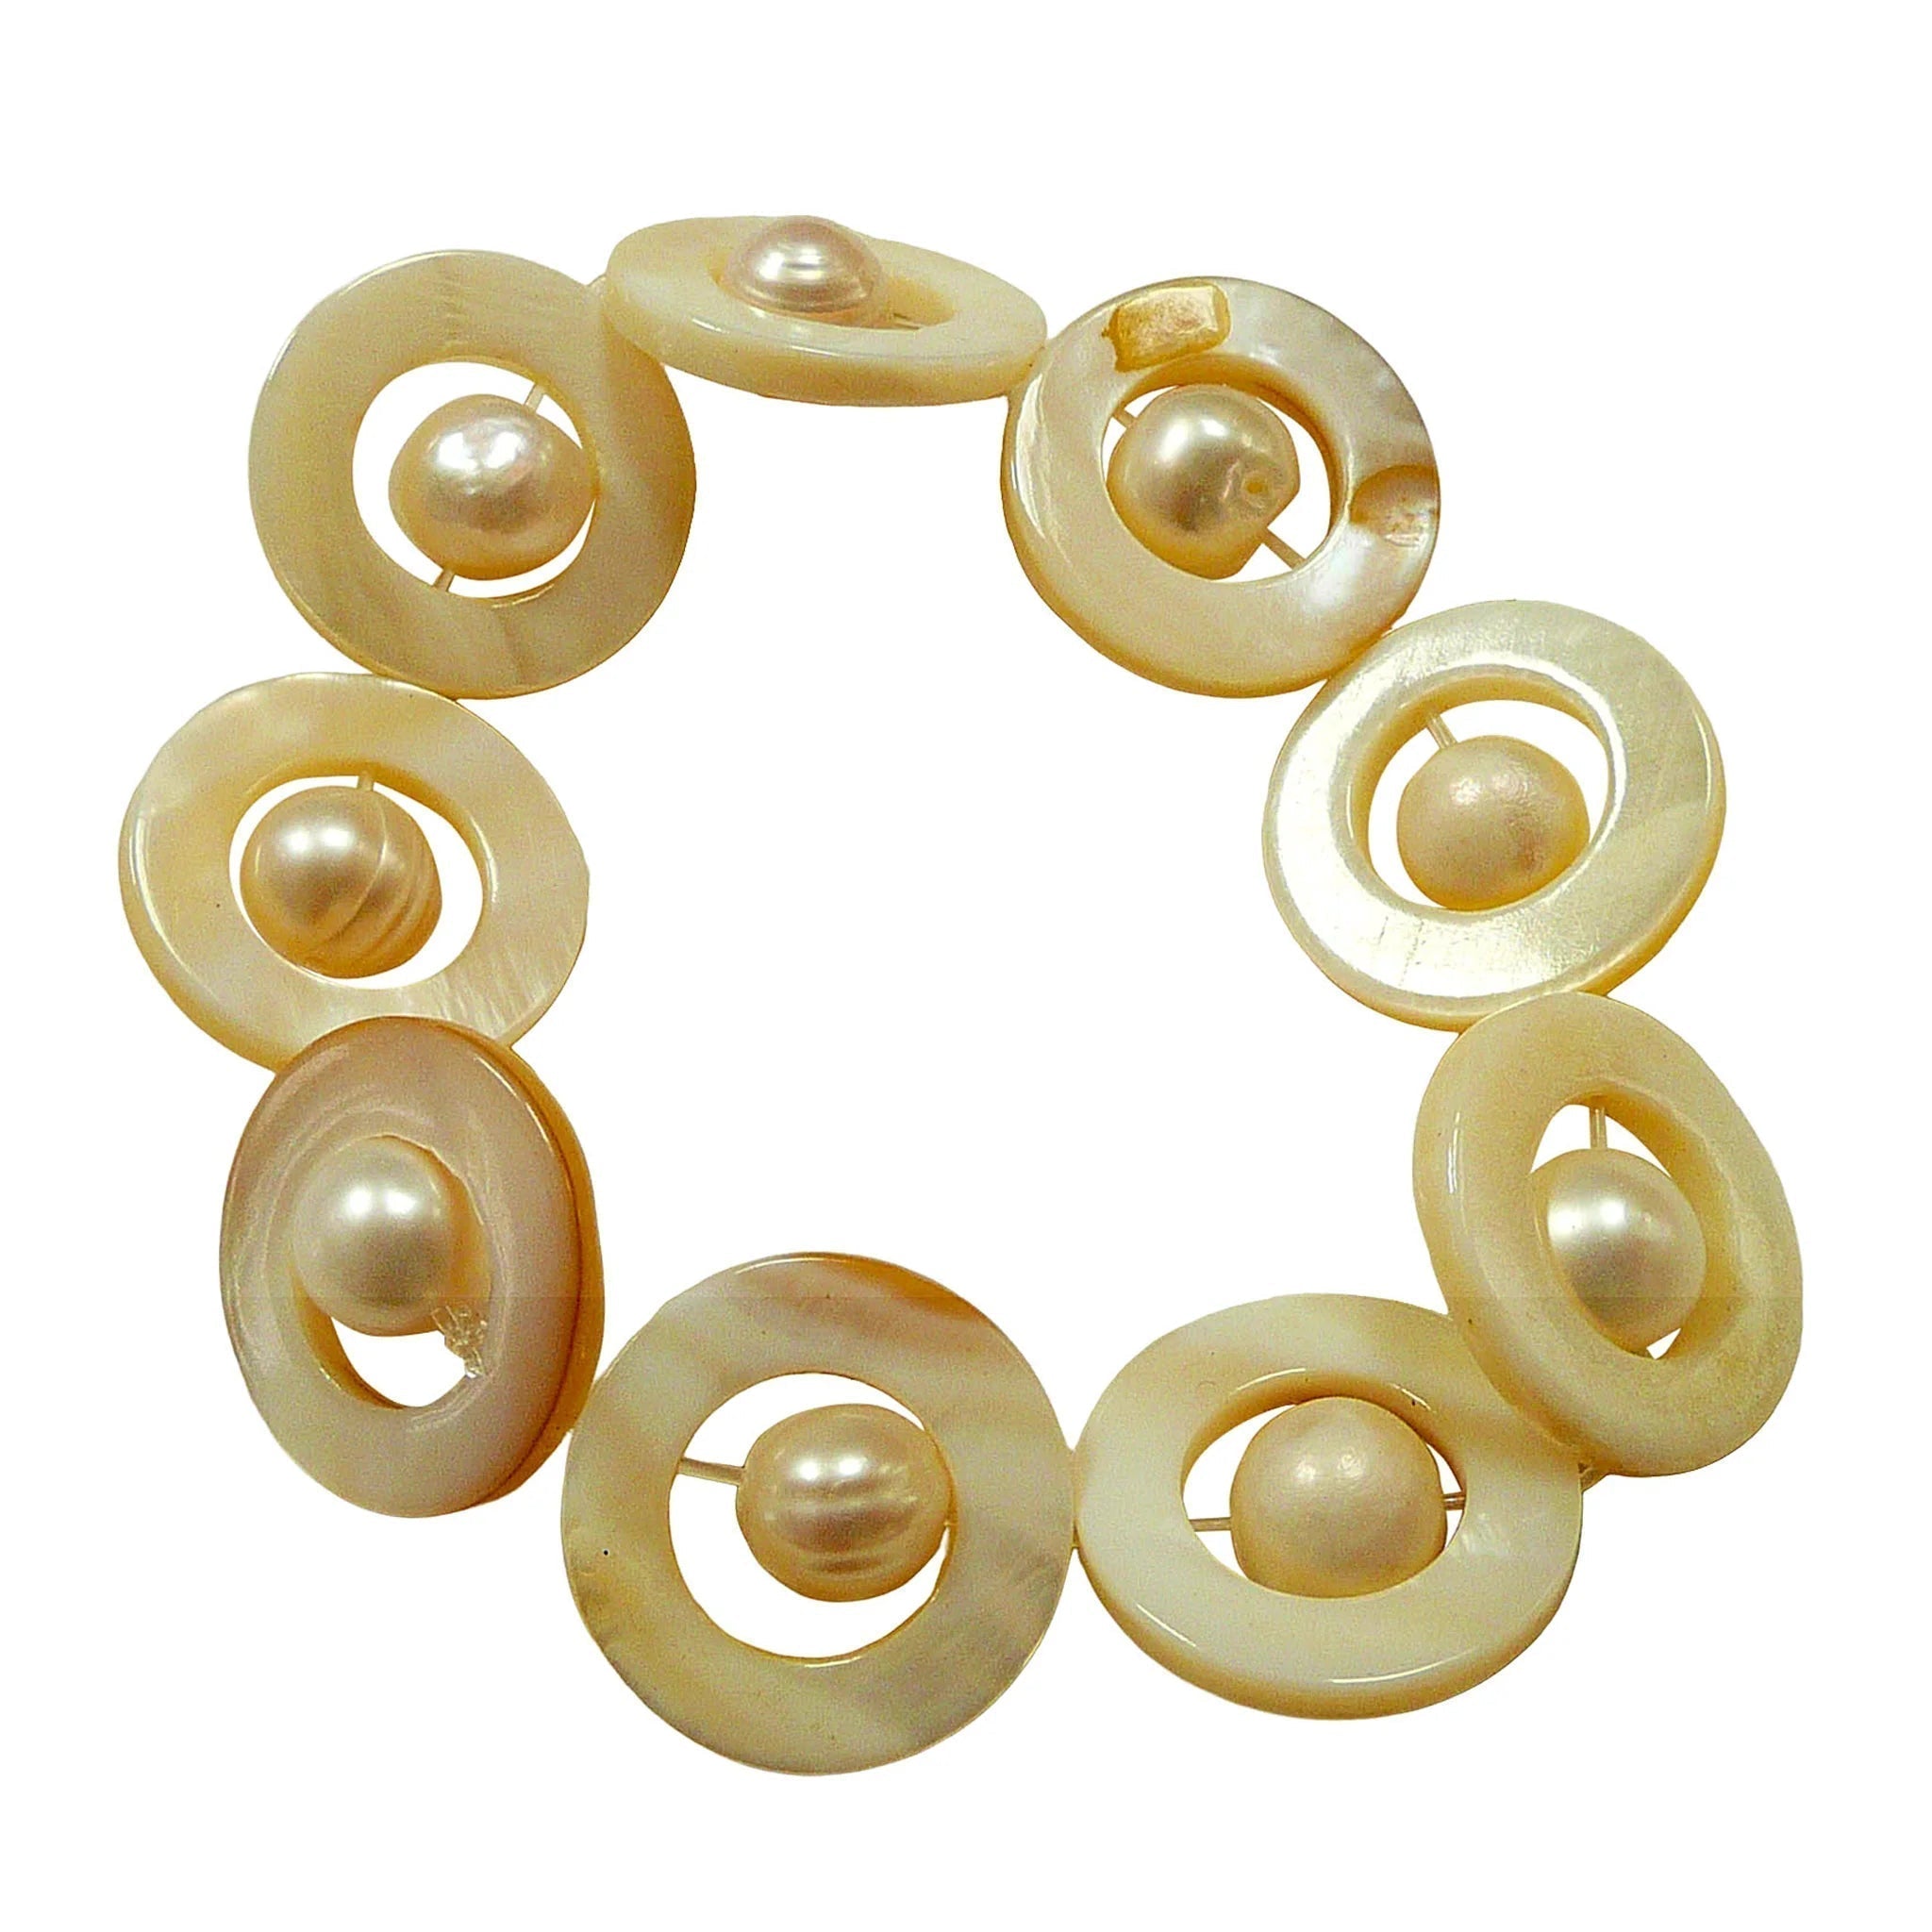 Pearl Shell Bracelet White - The Nancy Smillie Shop - Art, Jewellery & Designer Gifts Glasgow